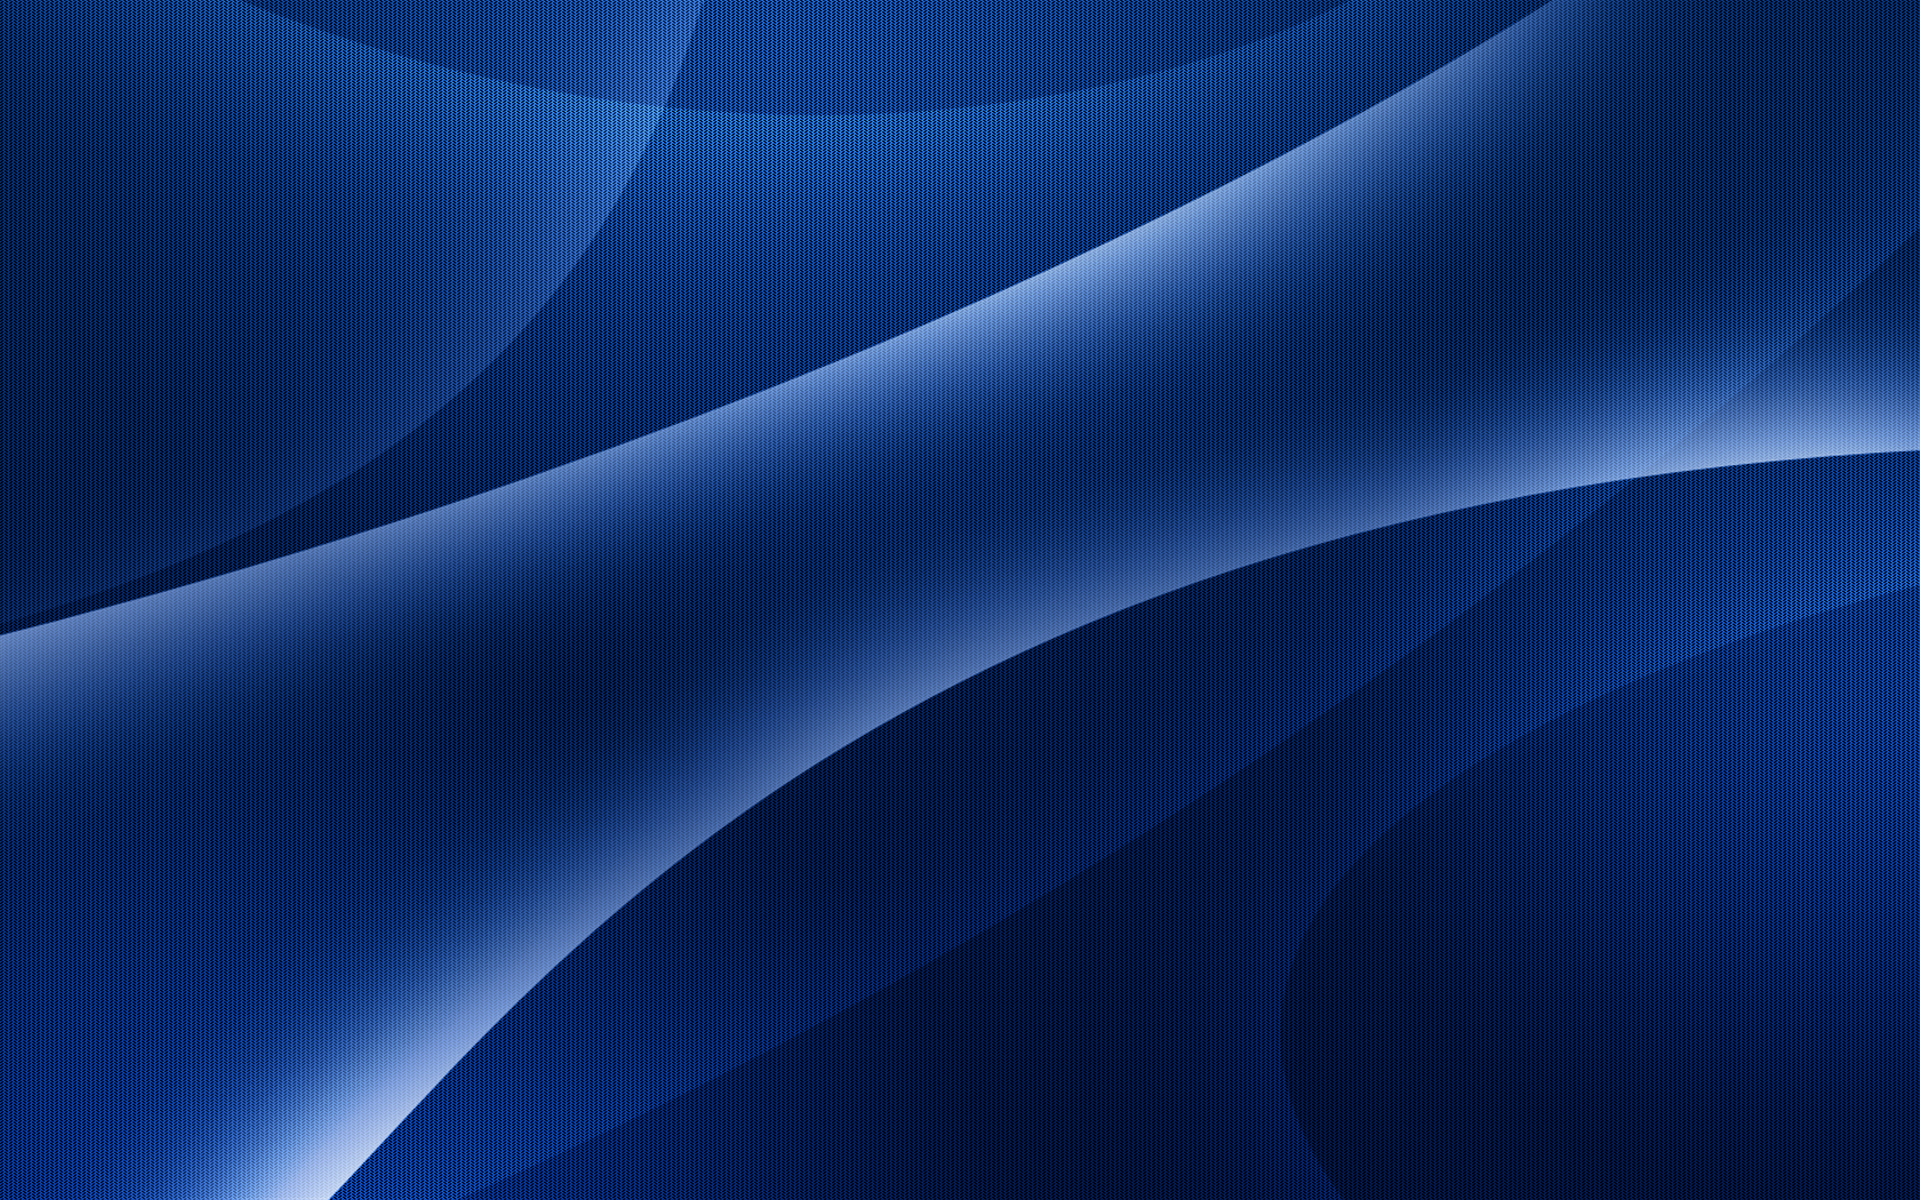 Wallpapers screensaver blue bands on the desktop